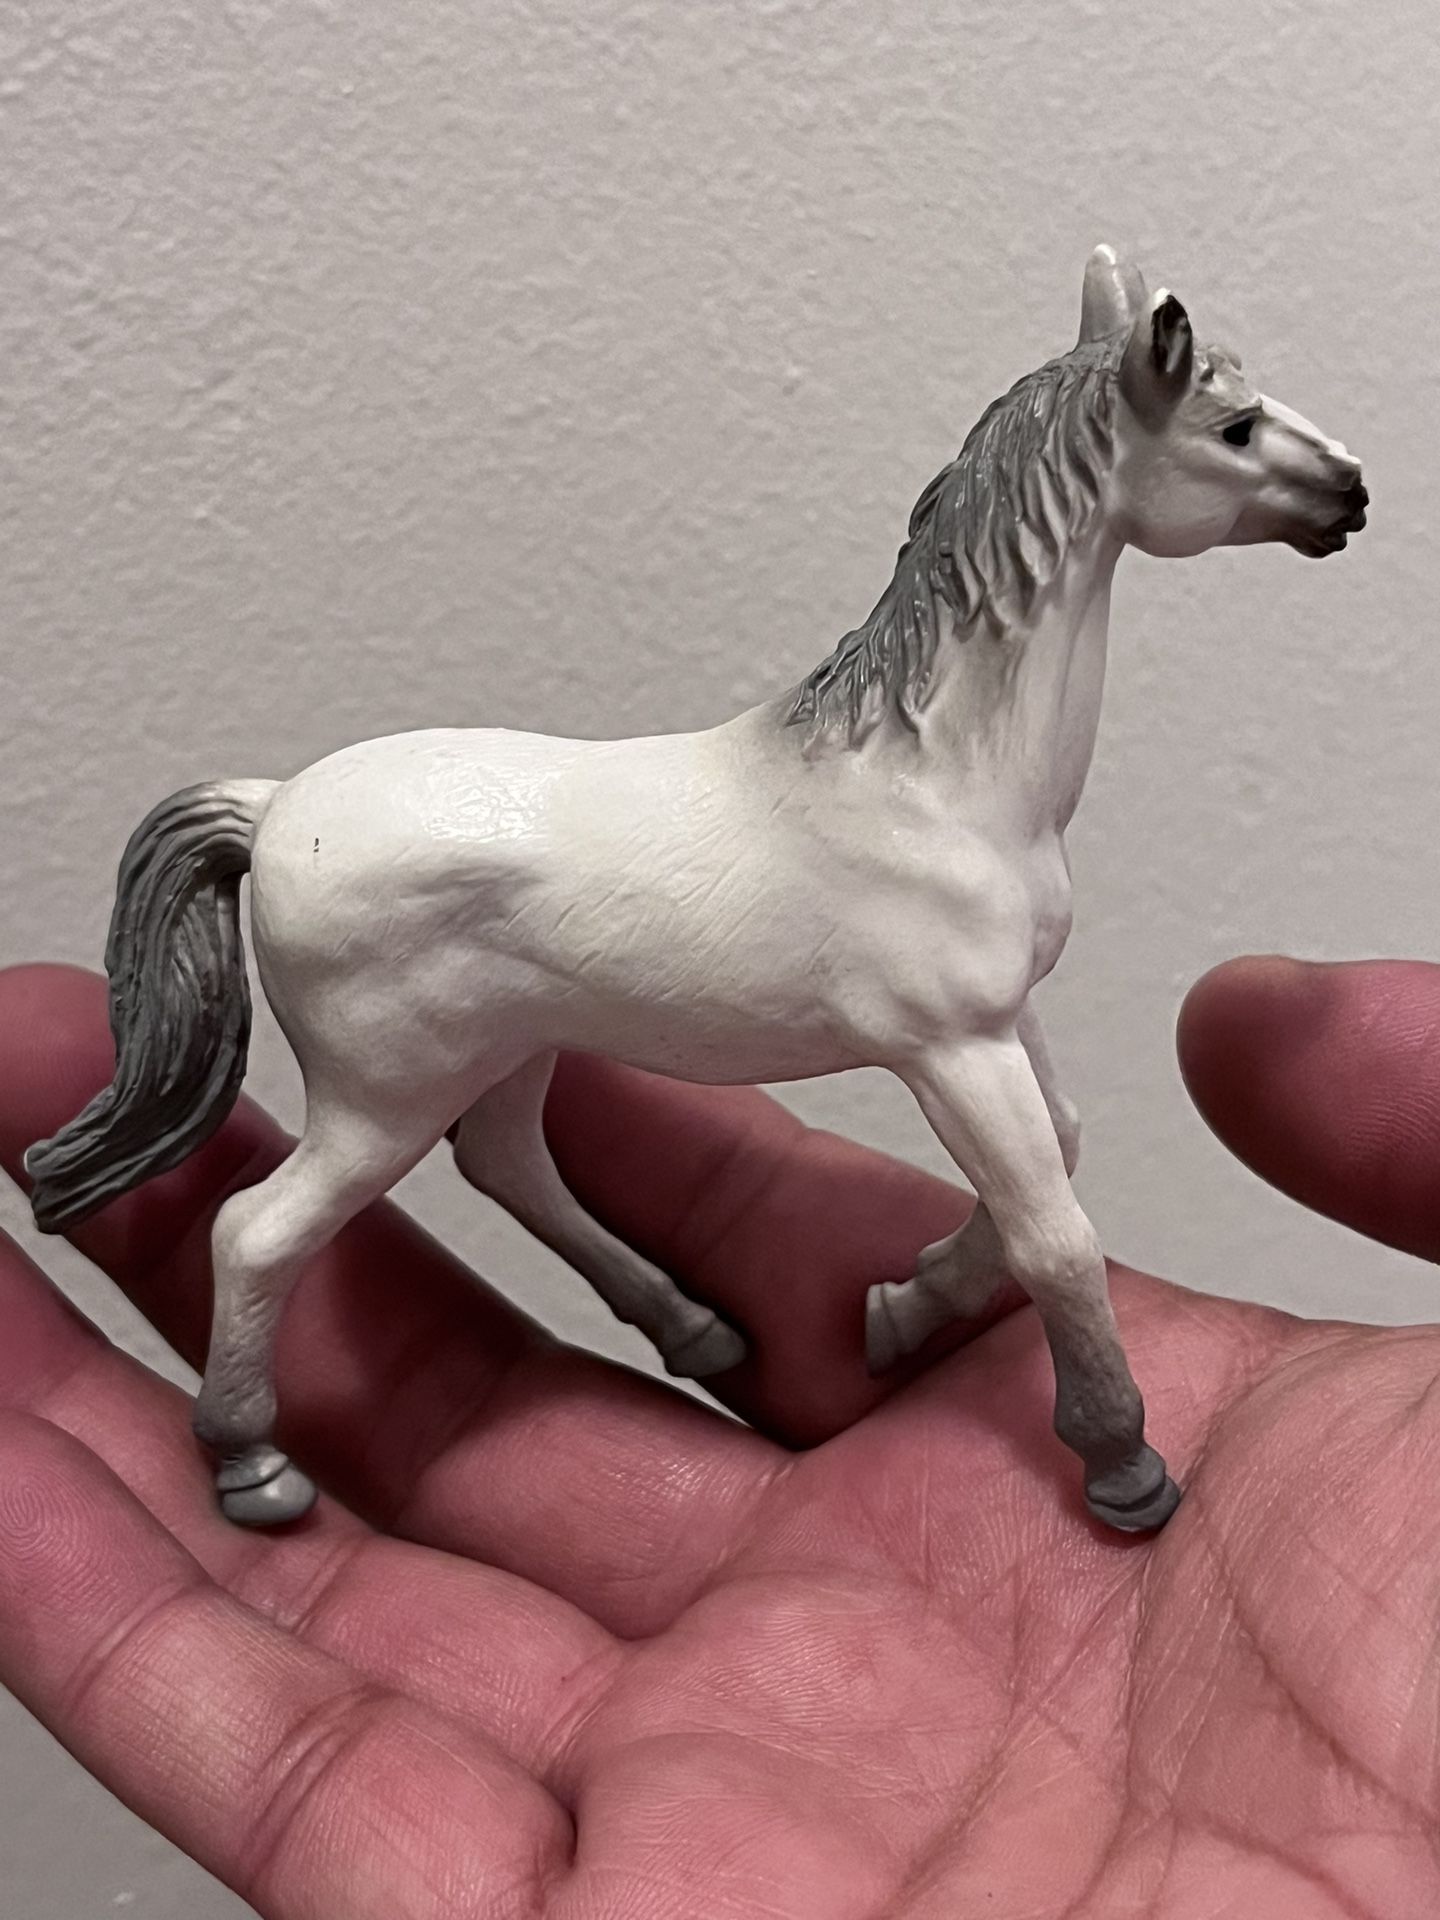 Arabian Horse Figure 2007 White Grey Mare 3 1/2" tall Used Farm Animal Toy